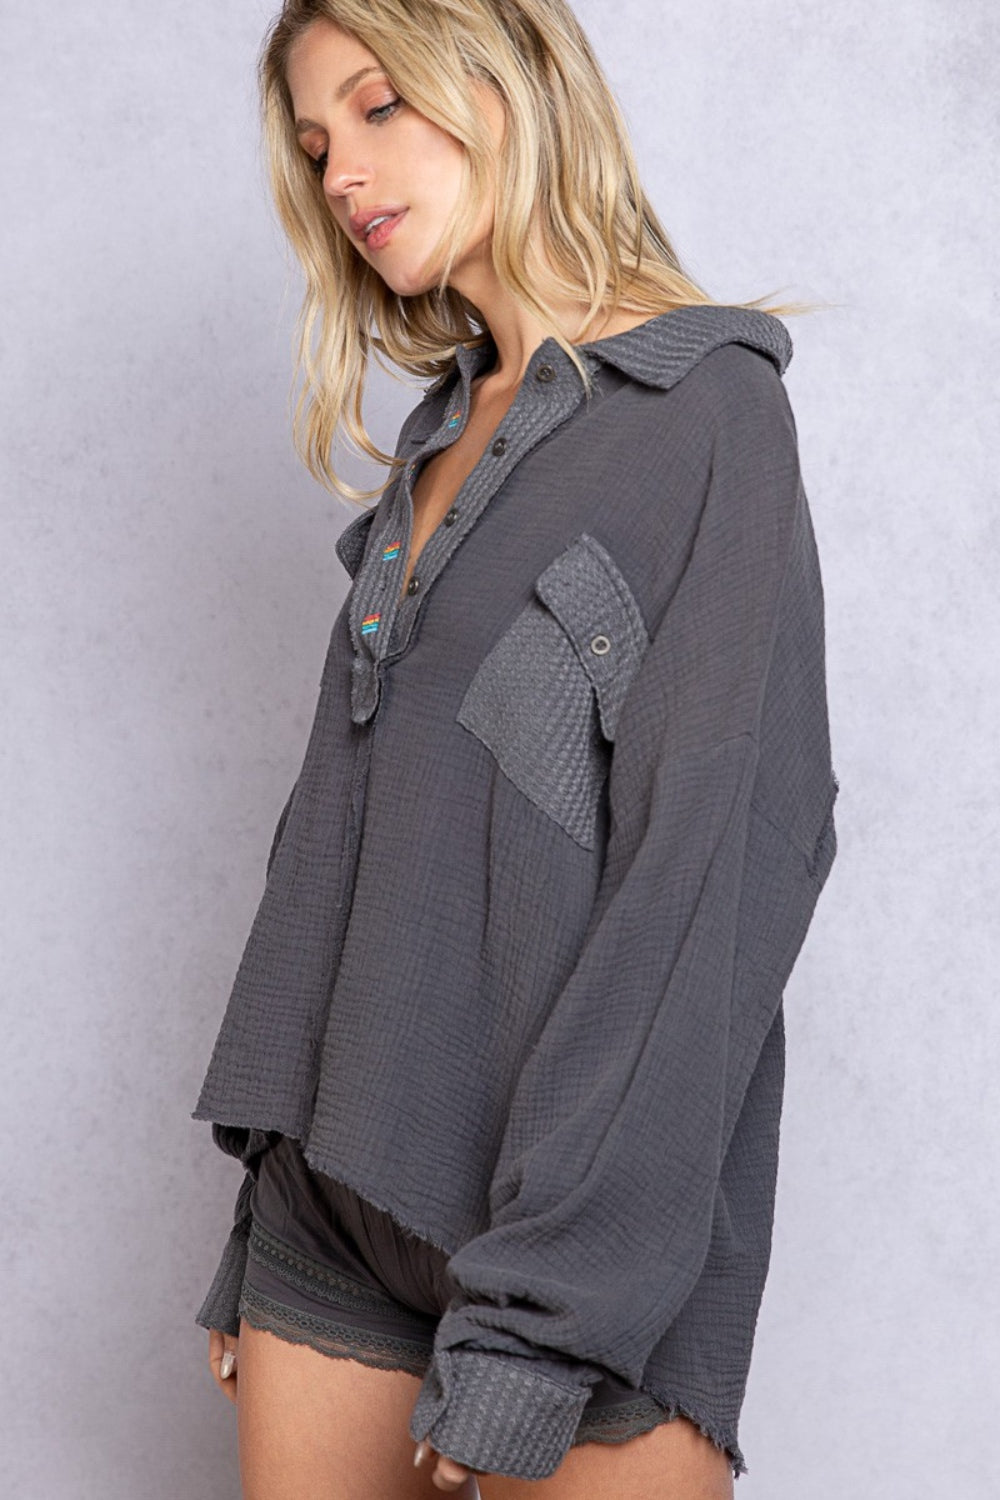 Gray POL Texture Half Button Long Sleeve Top Sentient Beauty Fashions Apaparel & Accessories